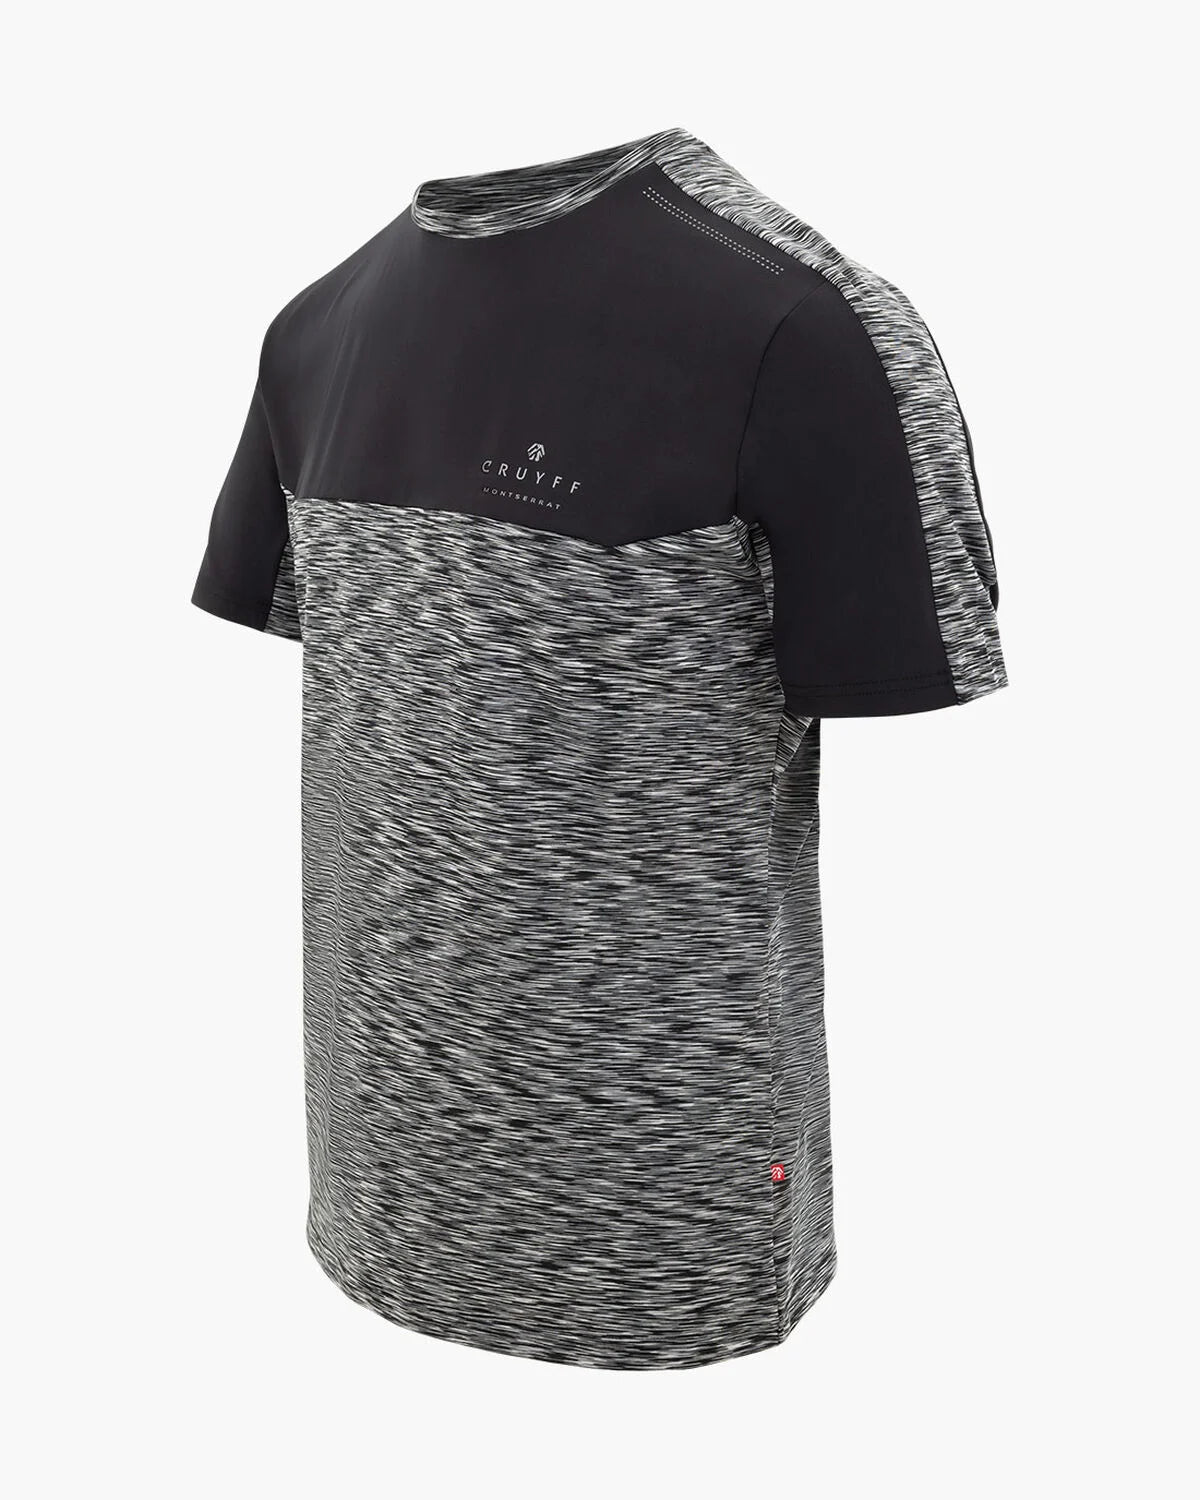 Cruyff Route T-Shirt Balck